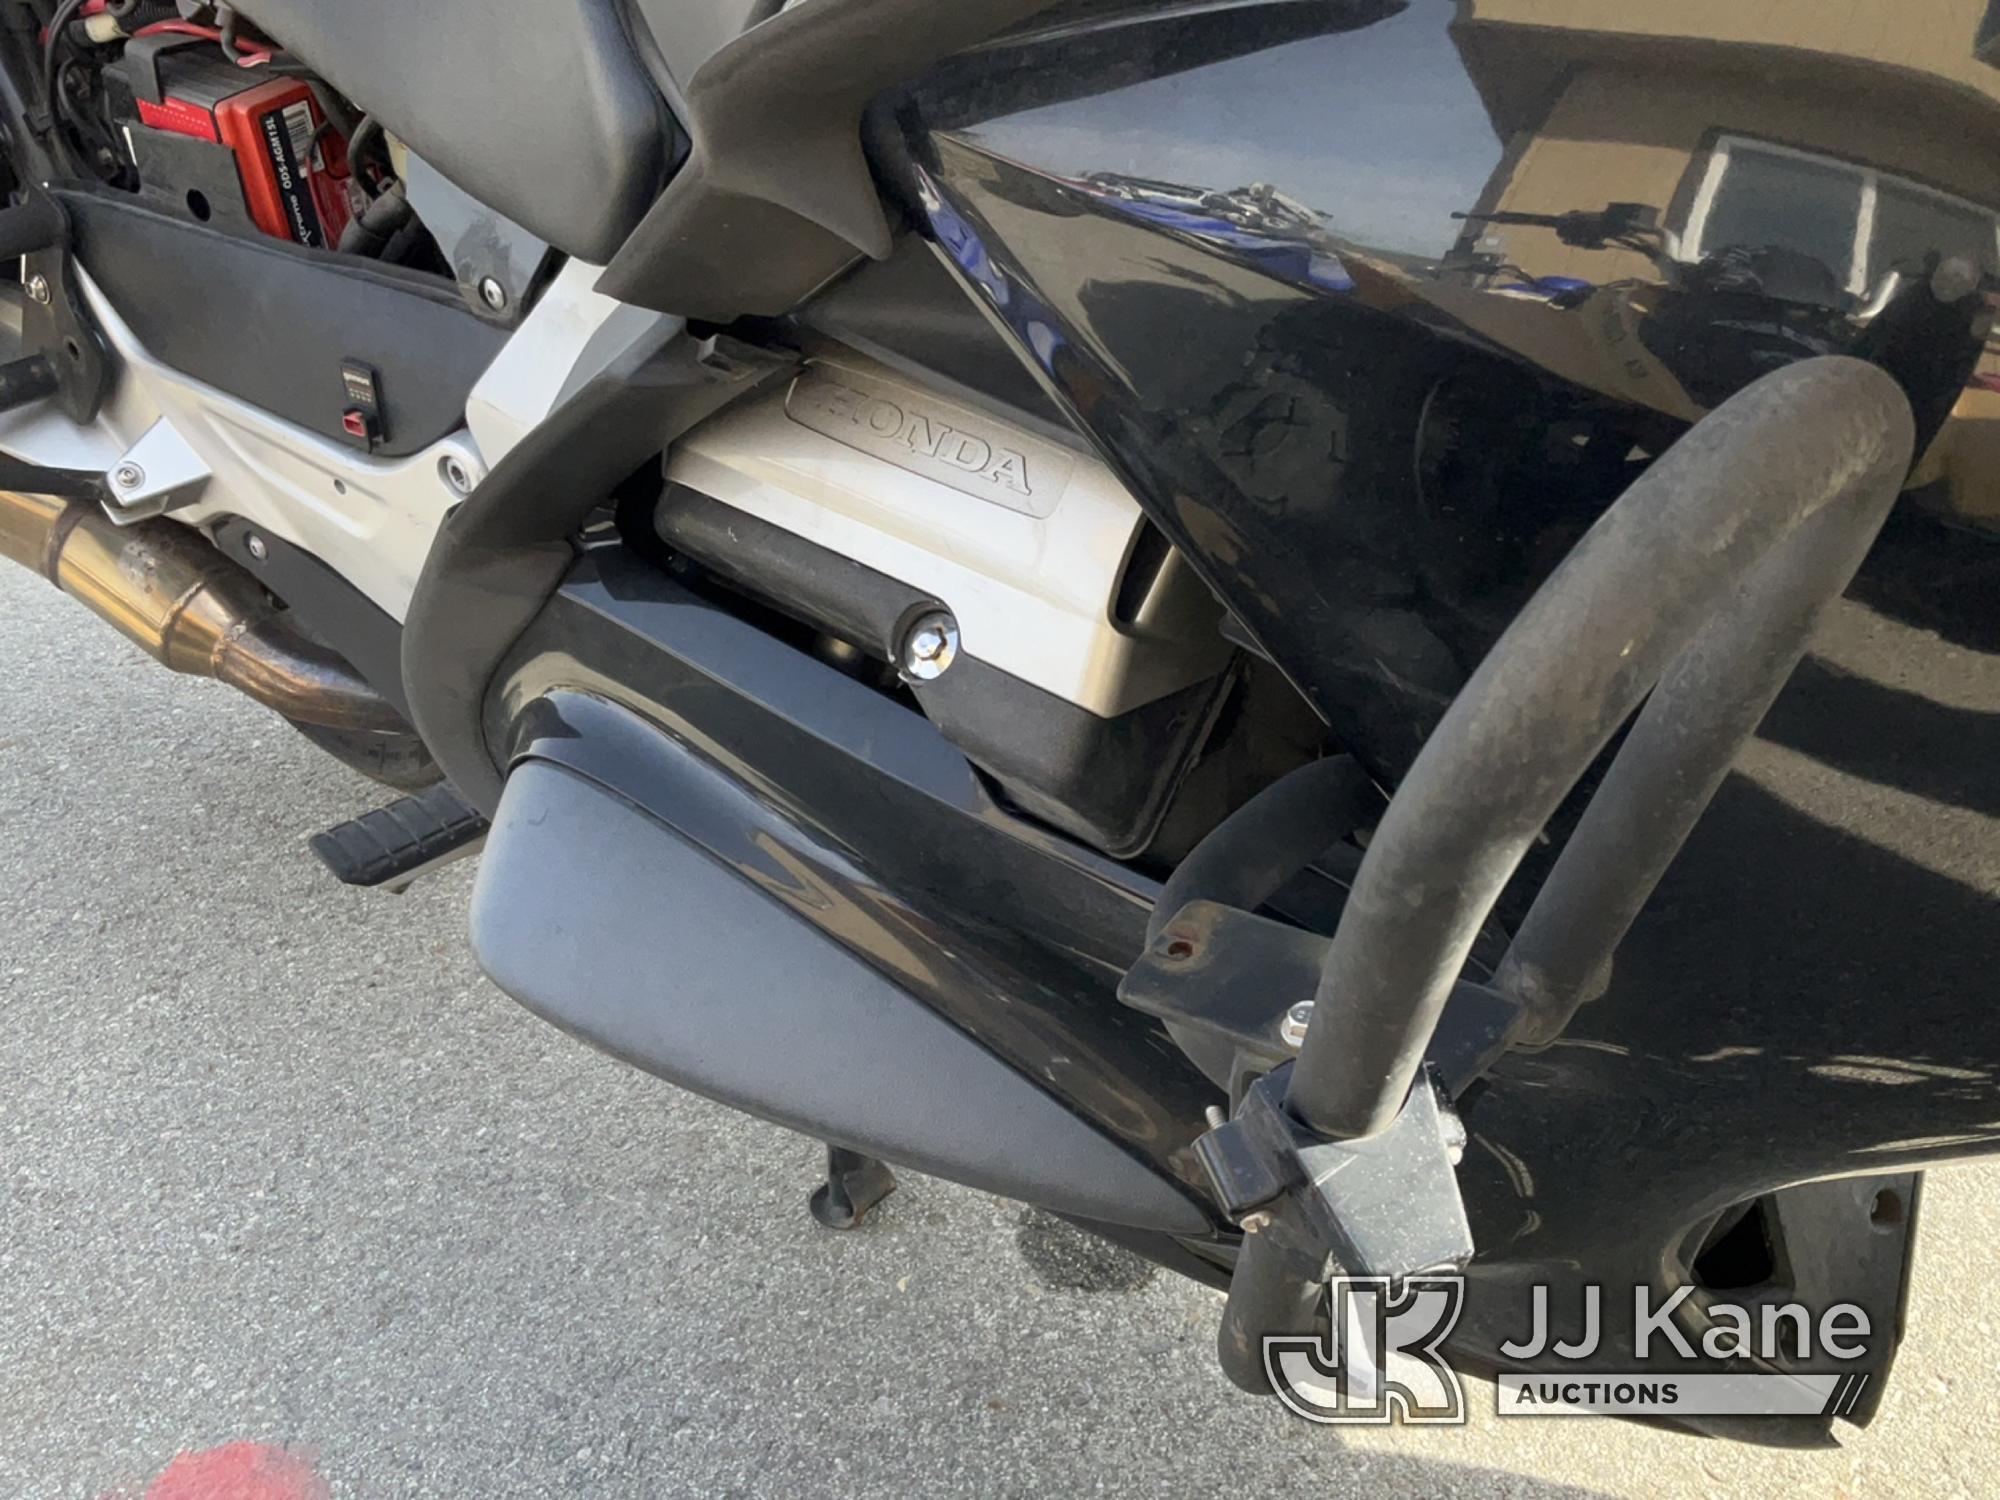 (Jurupa Valley, CA) 2015 Honda ST1300PA Motorcycle Runs & Moves,ABS Light Is On